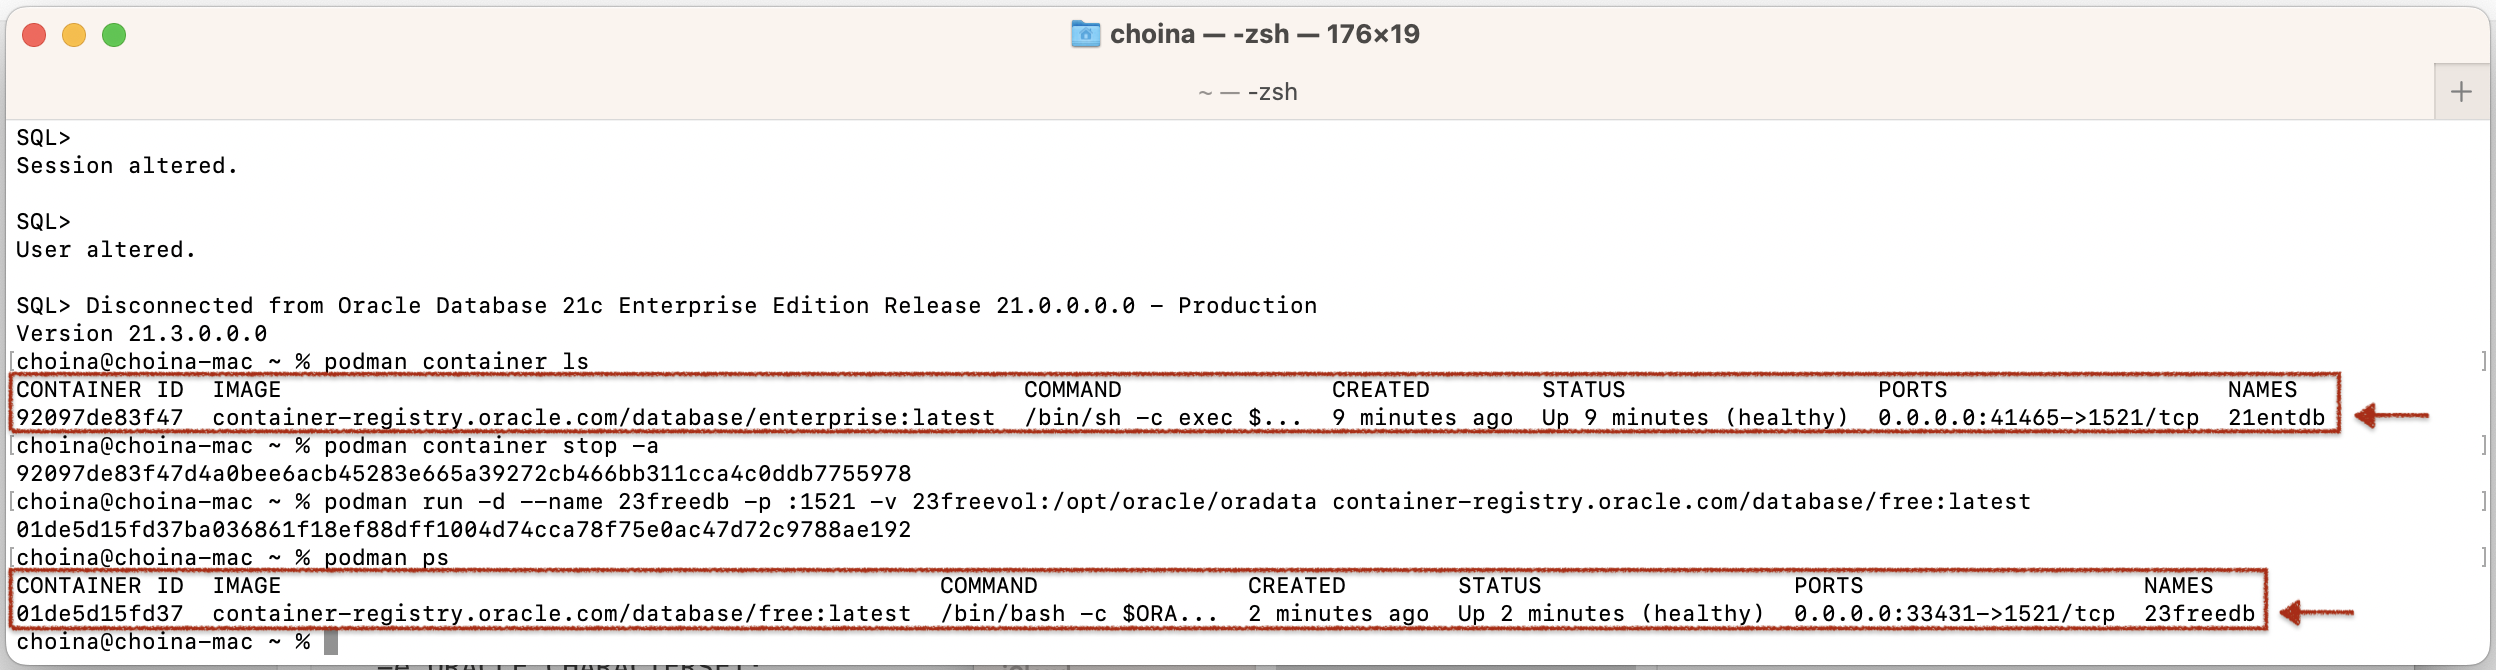 both machines running chris hoina senior product manager ords database tools oracle